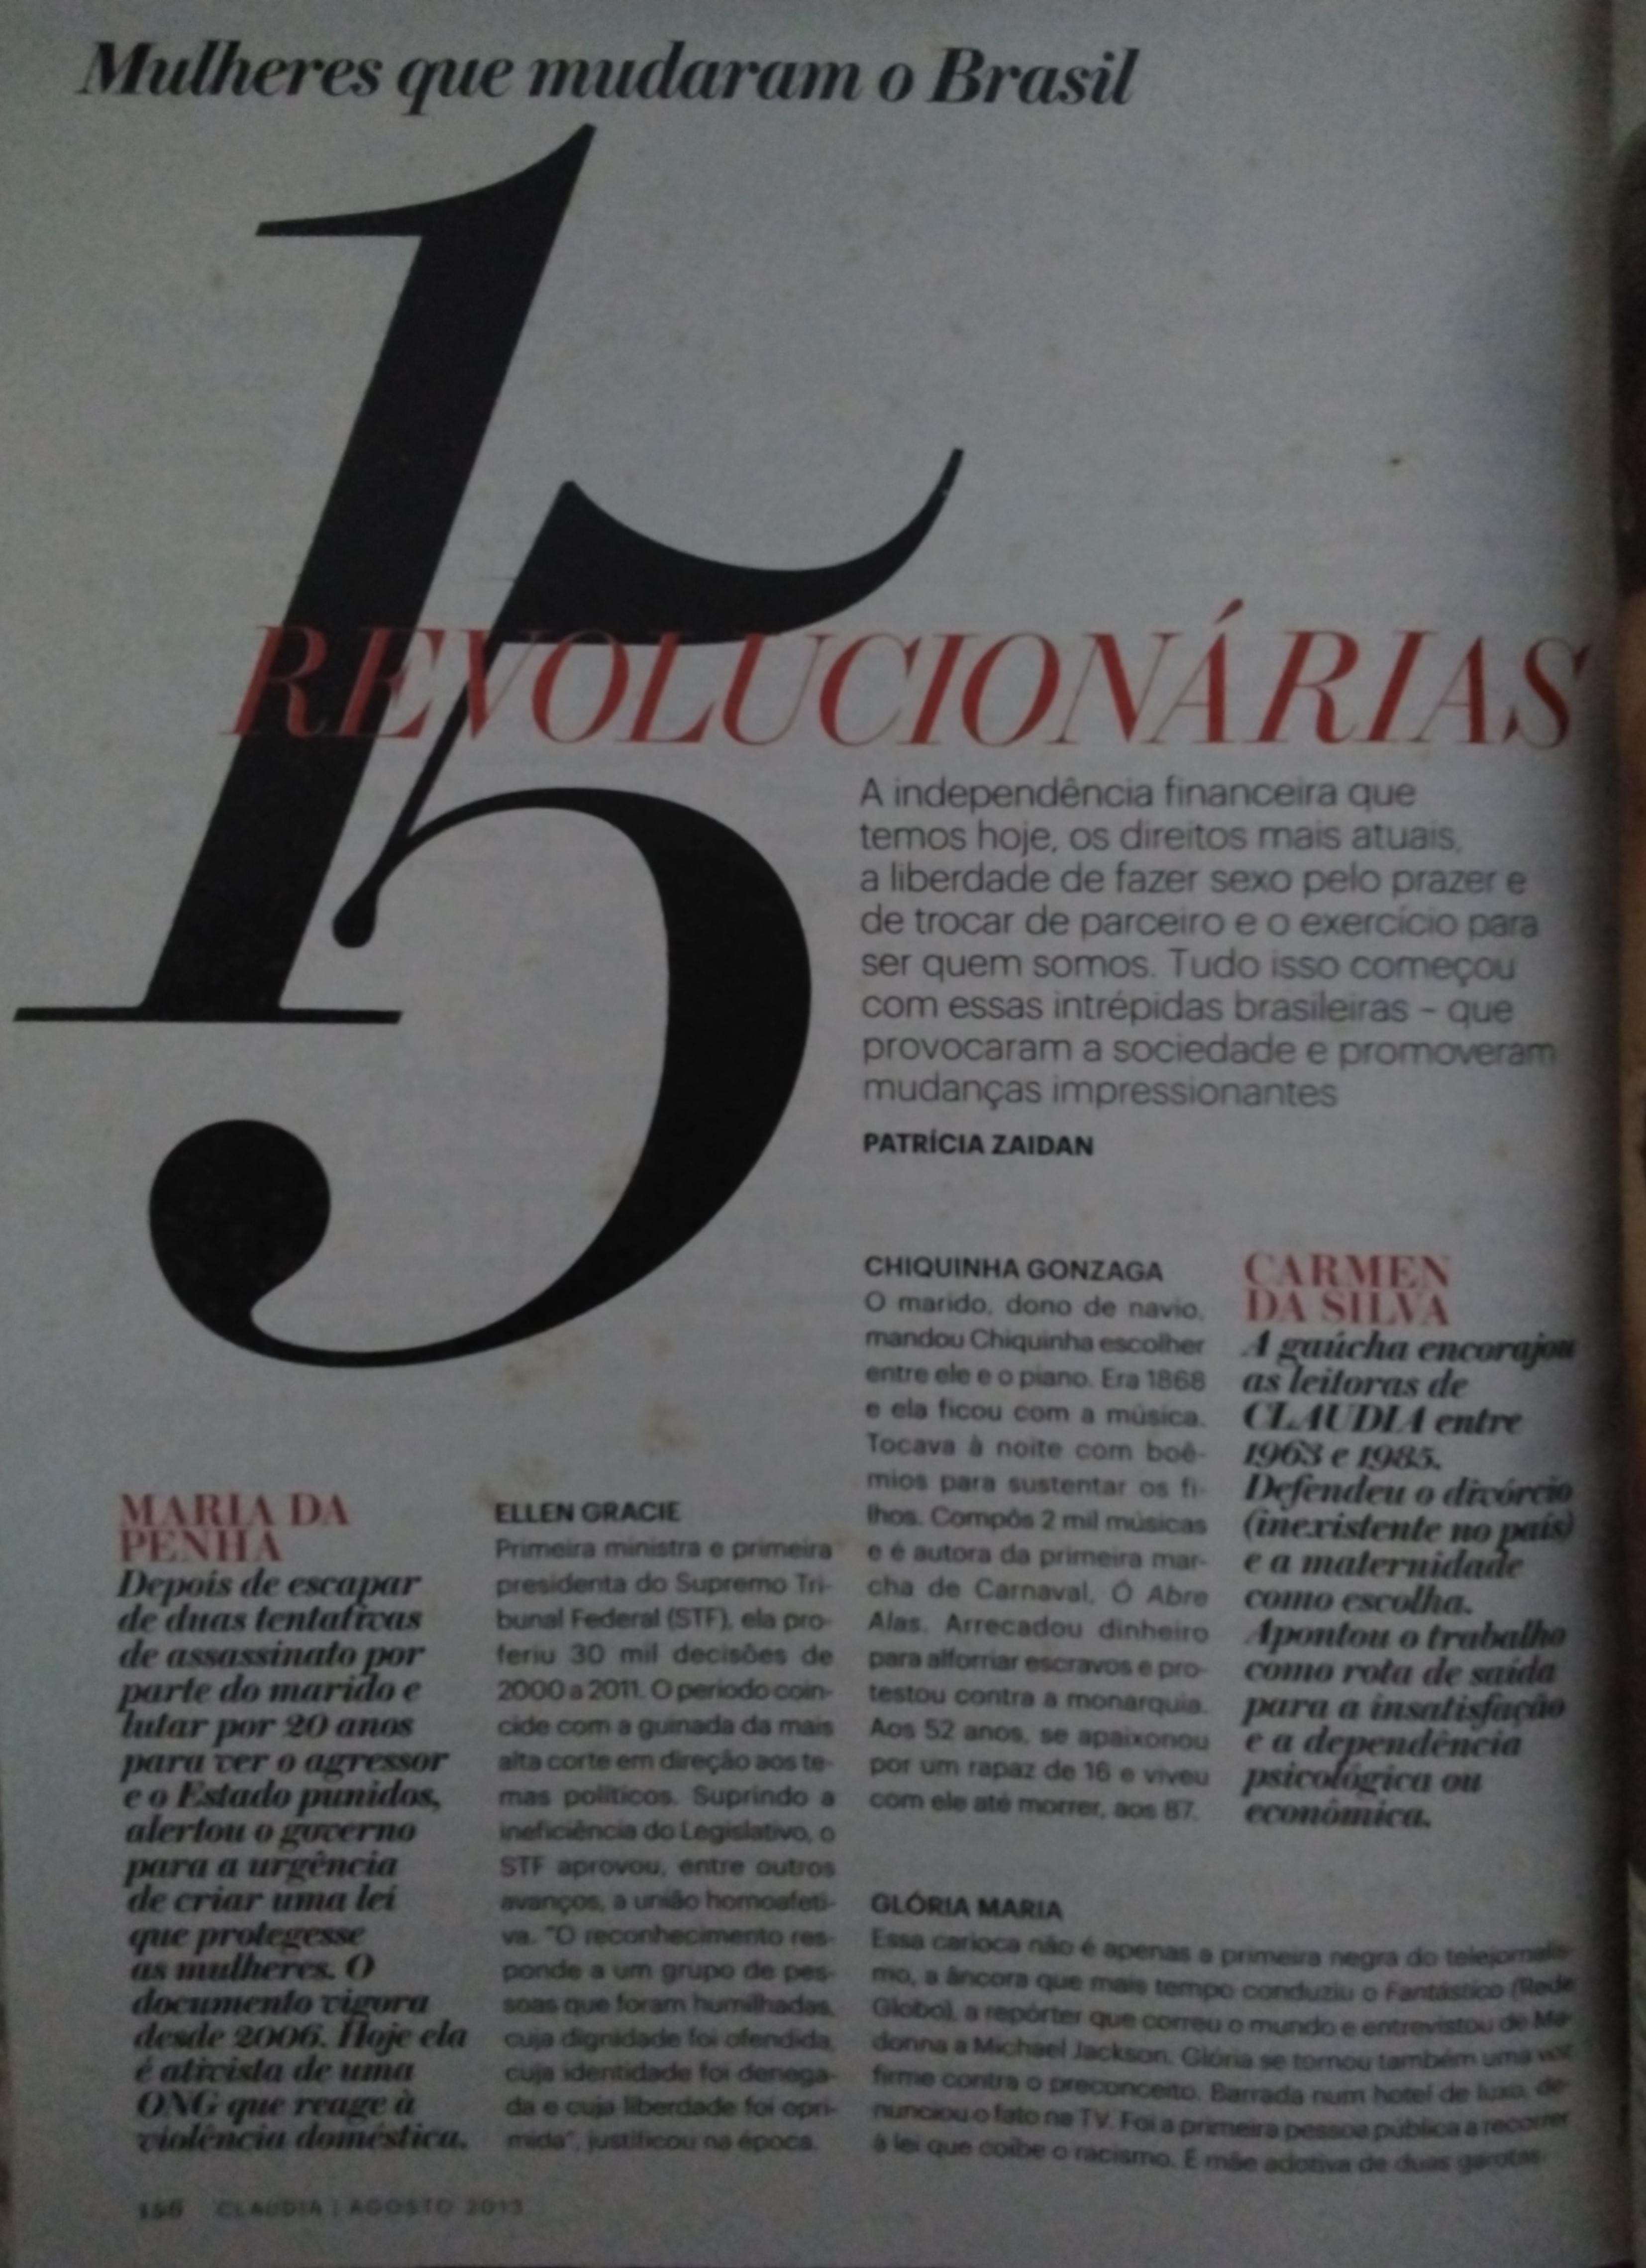 Revista Claudia, nº 613, outubro de 2013. Pg. 156.